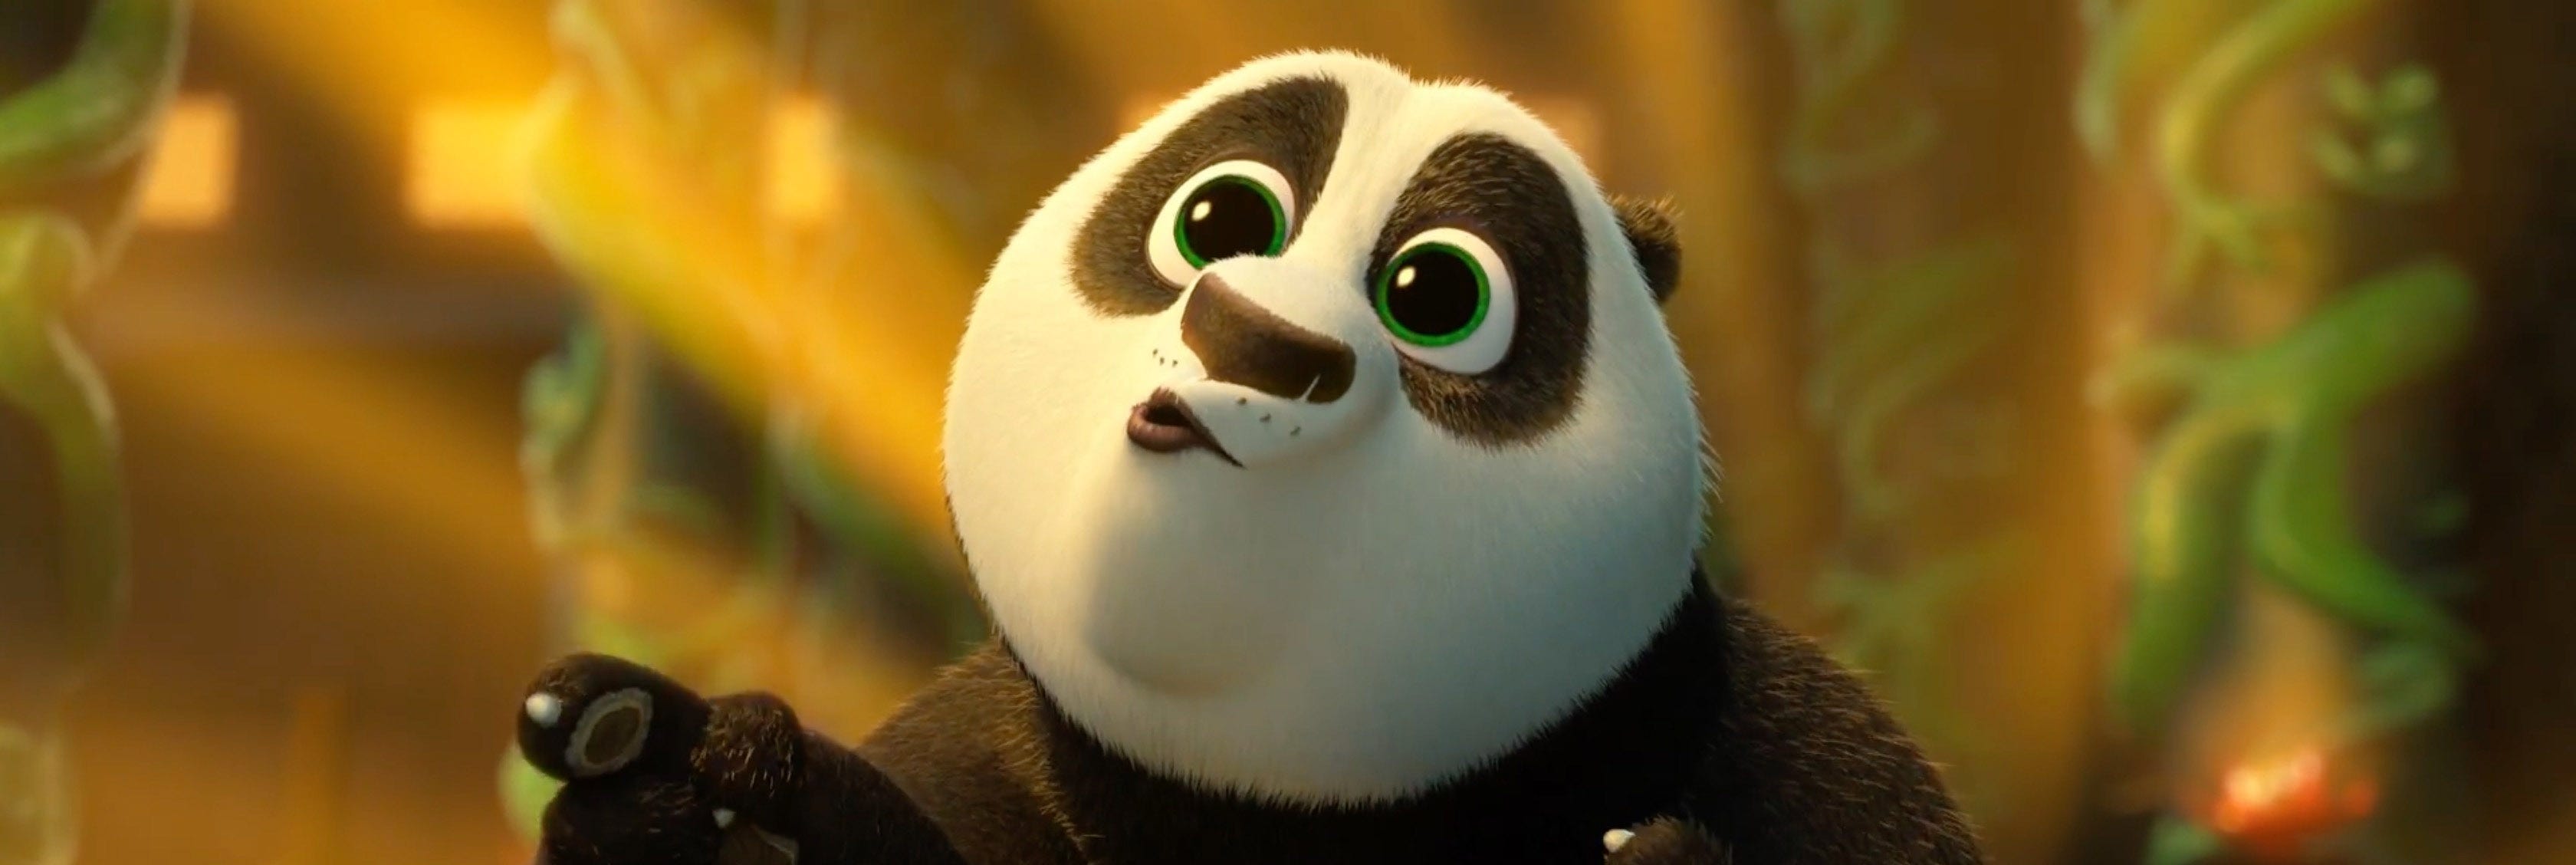 Kung Fu Panda Fan Fiction Porn - Movie Review: KUNG FU PANDA 3 Almost Stacks Up | by Judgy Josh | Medium